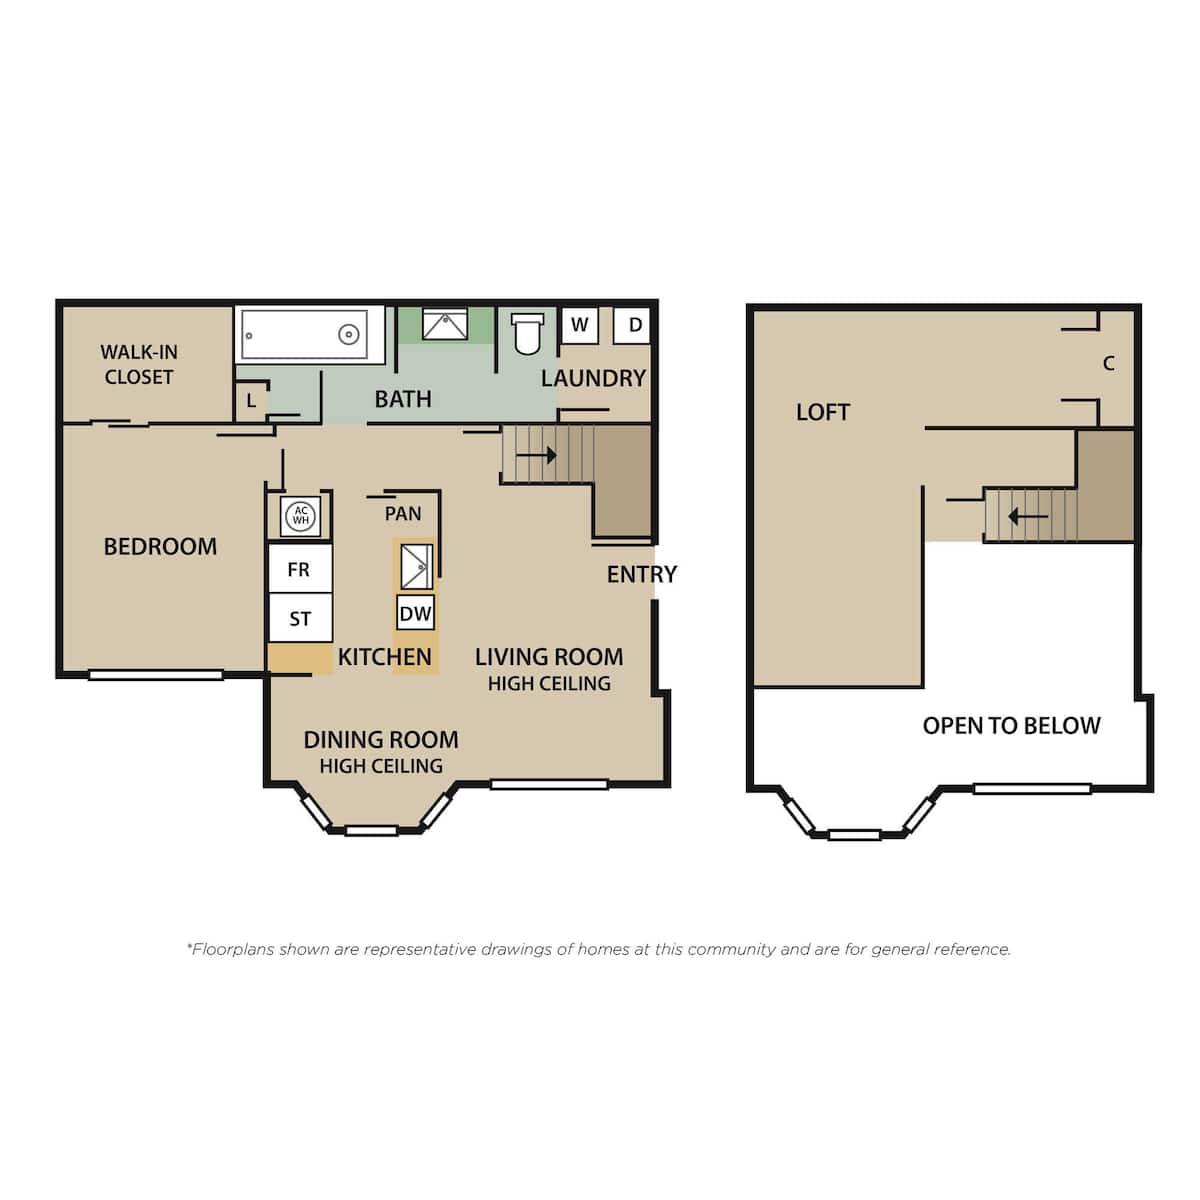 Floorplan diagram for GROVE A11 LOFT, showing 1 bedroom